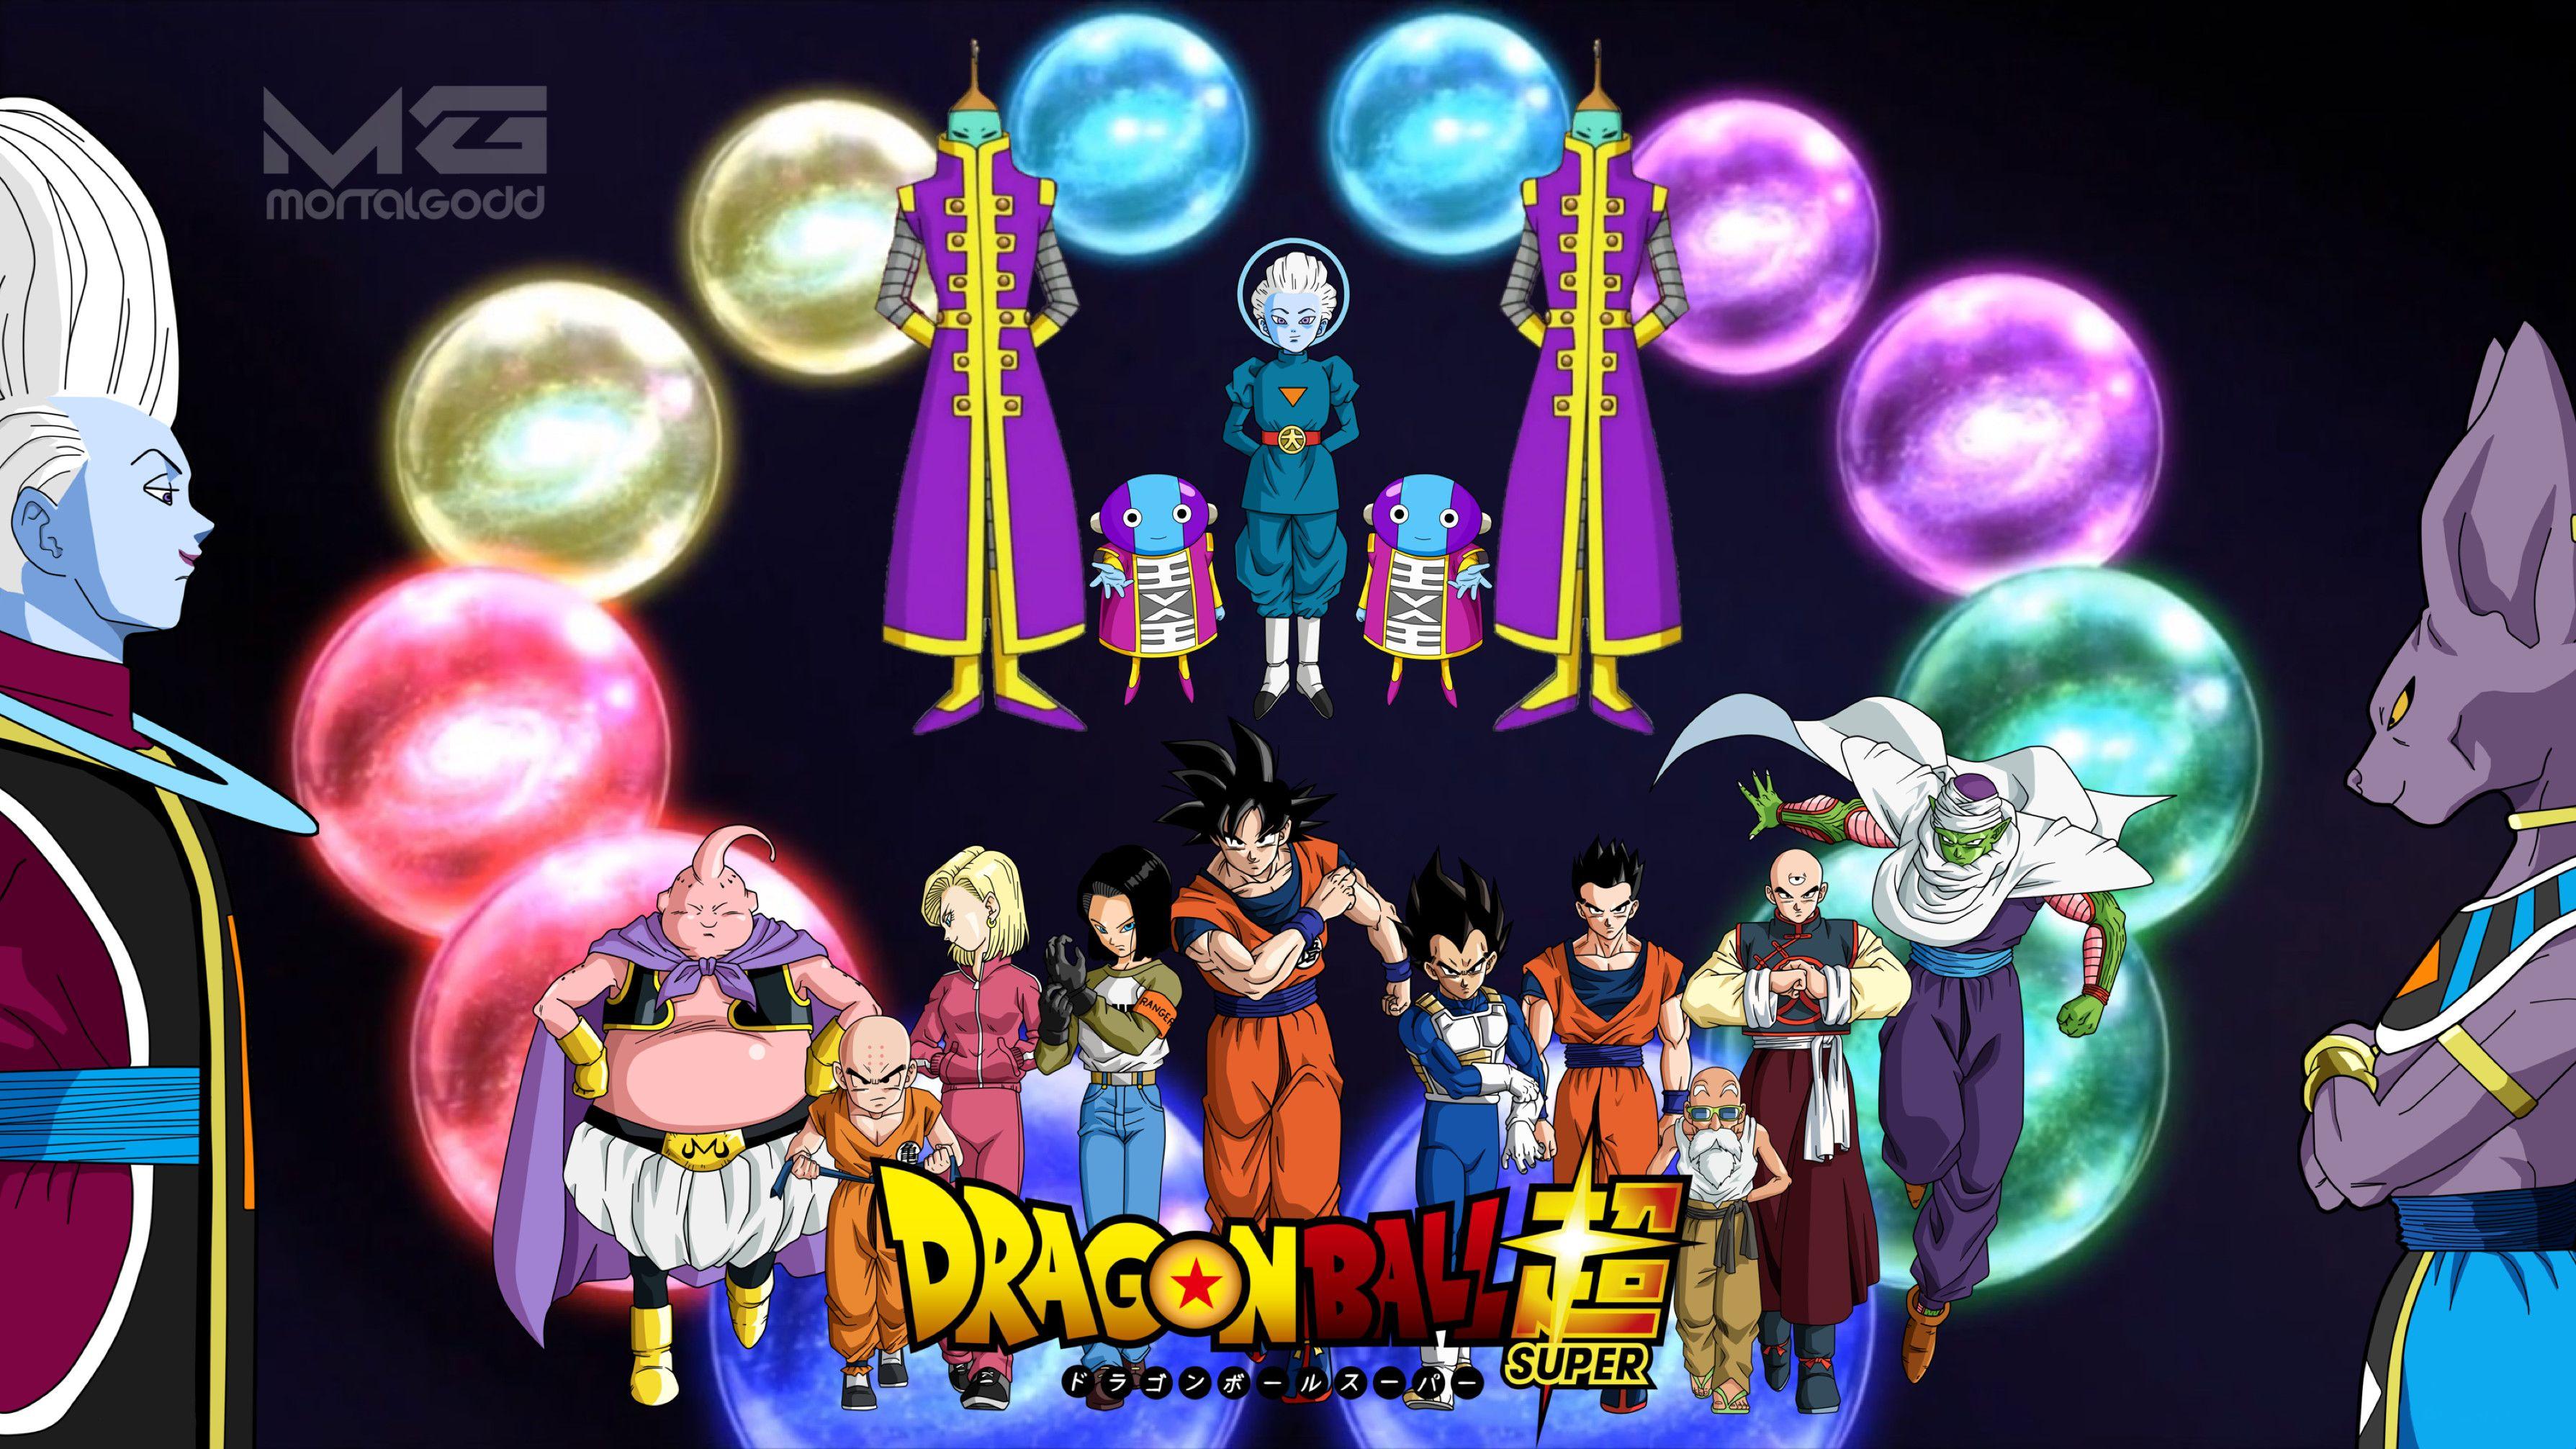 Dragon Ball Super Wallpaper background picture